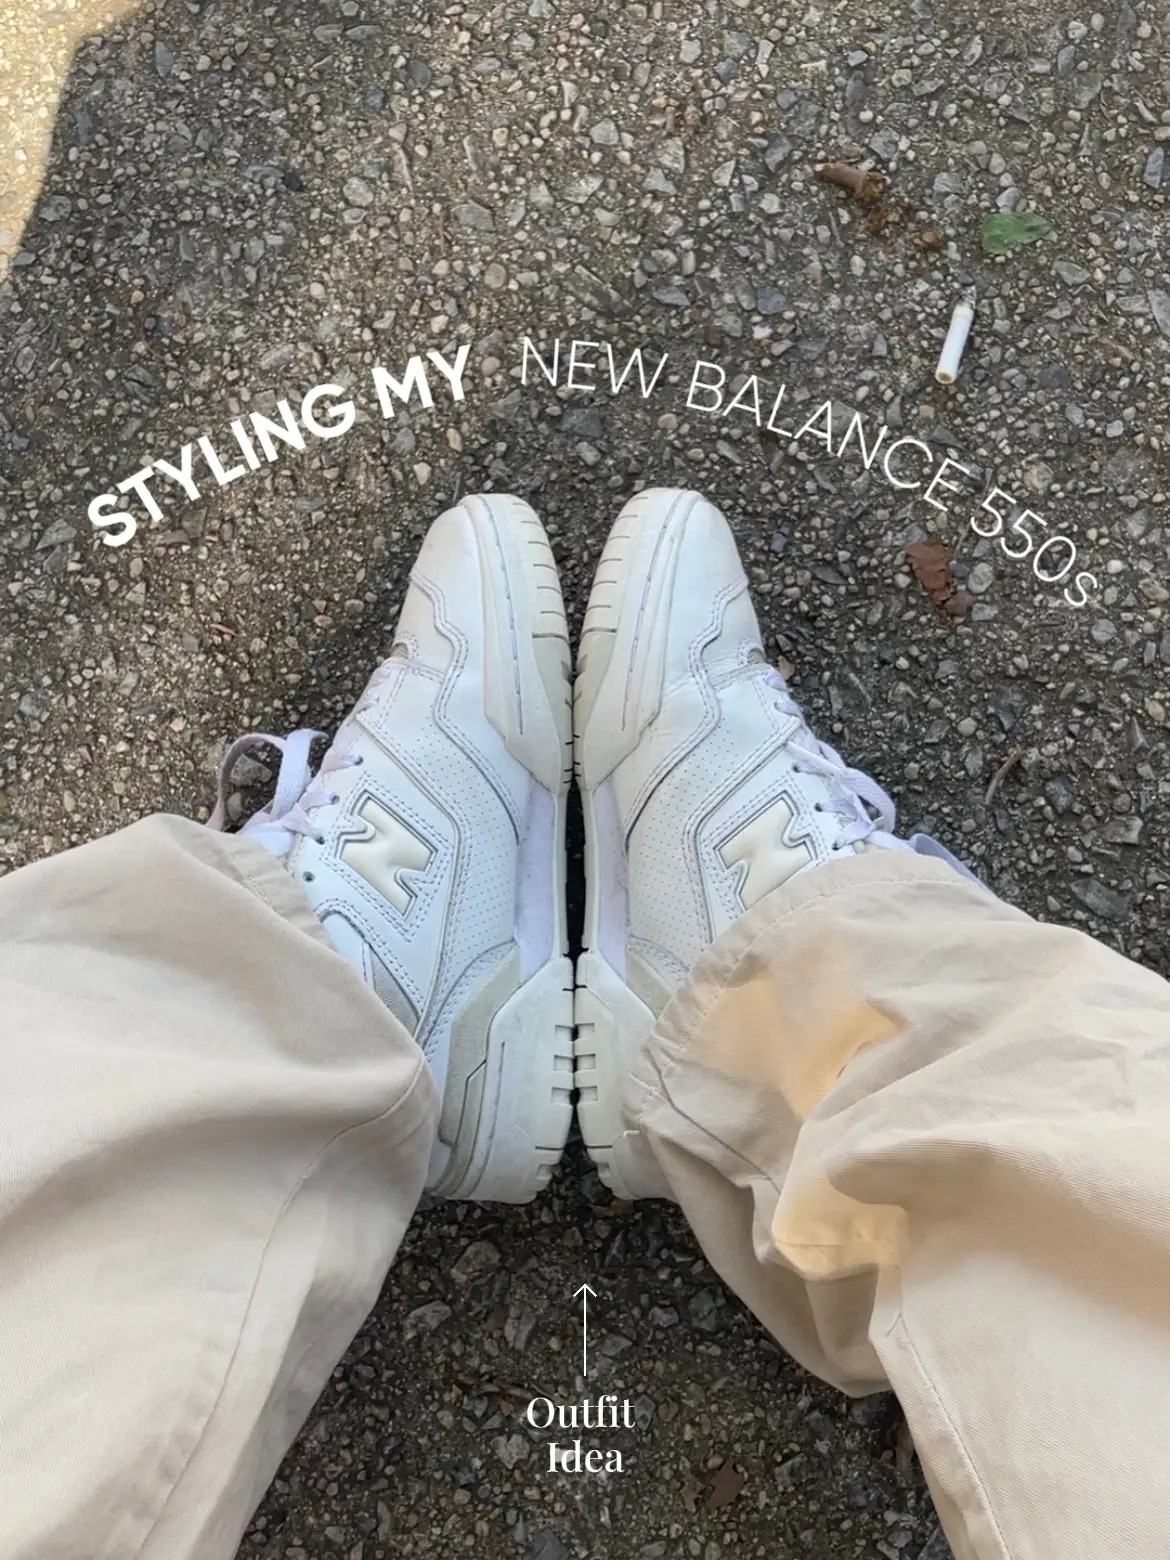 New Balance 550 On Feet: Styling The New Balance 550